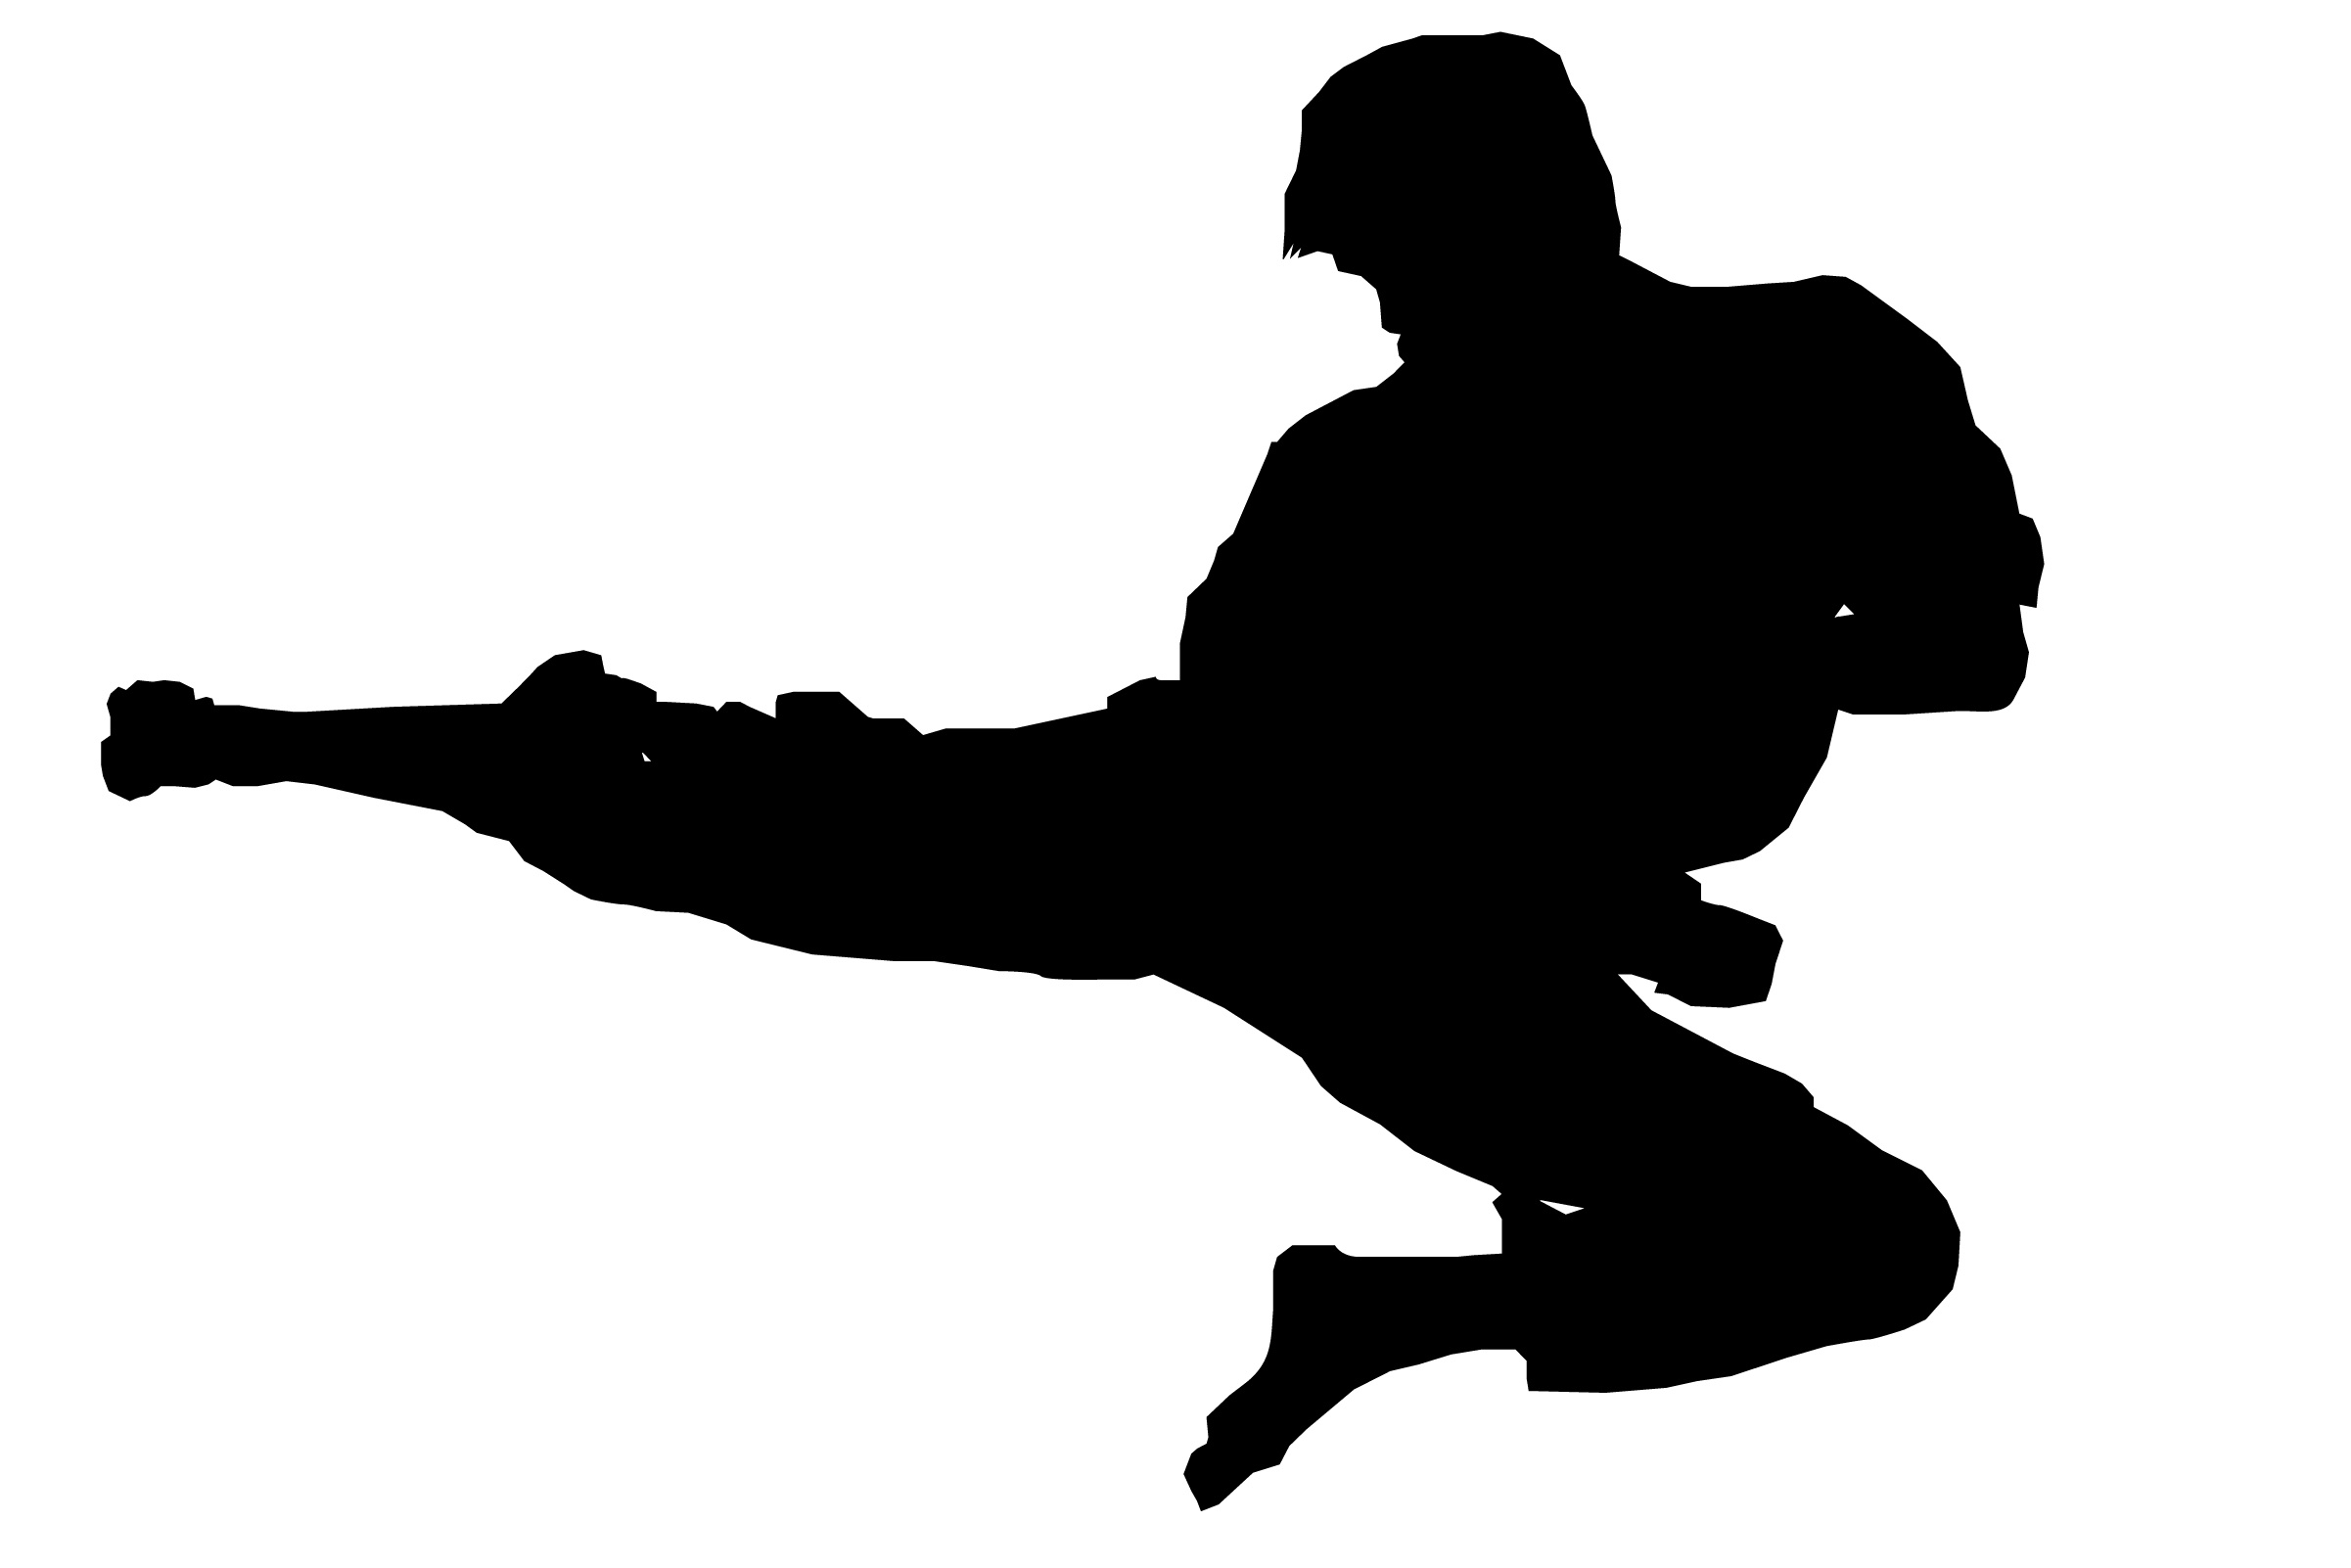 karate clipart silhouette